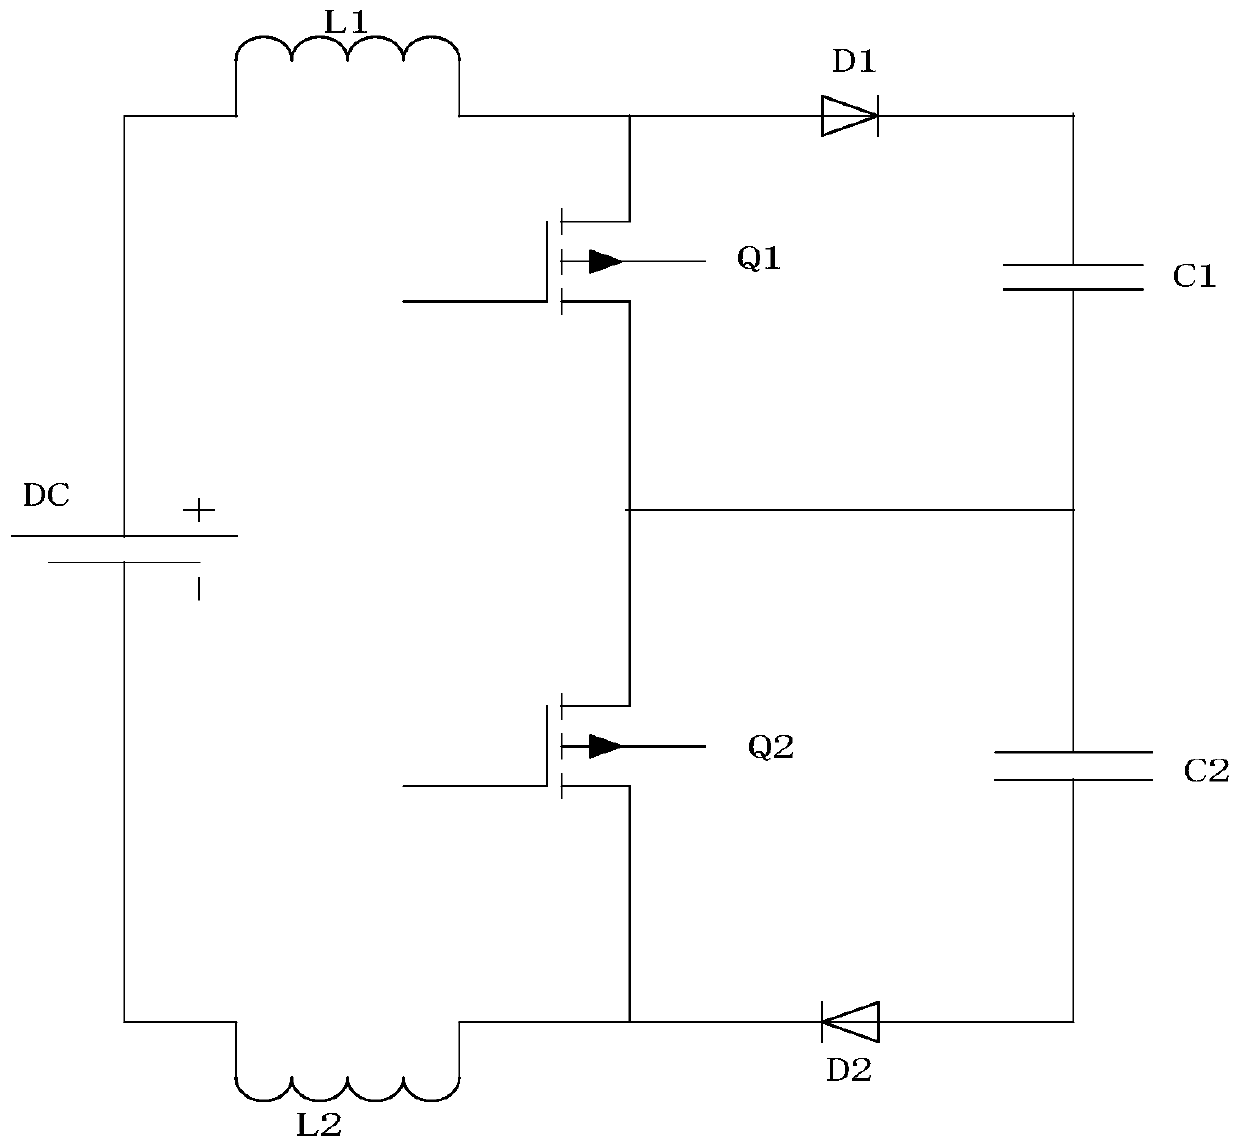 Three-level boost circuit